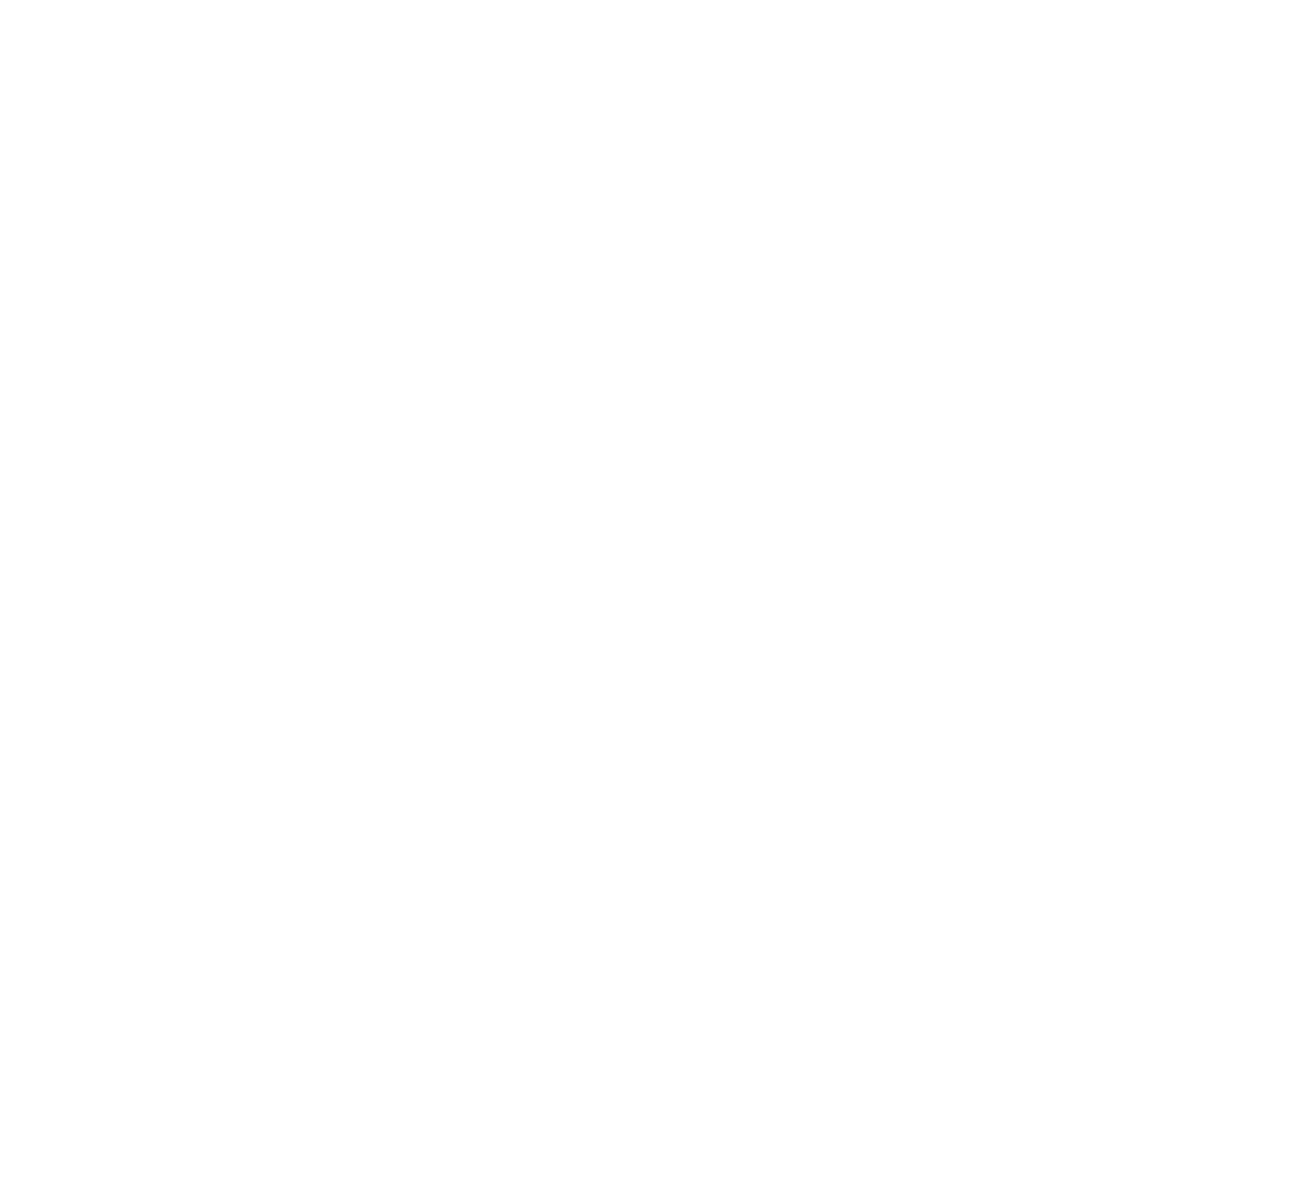 SkinCare